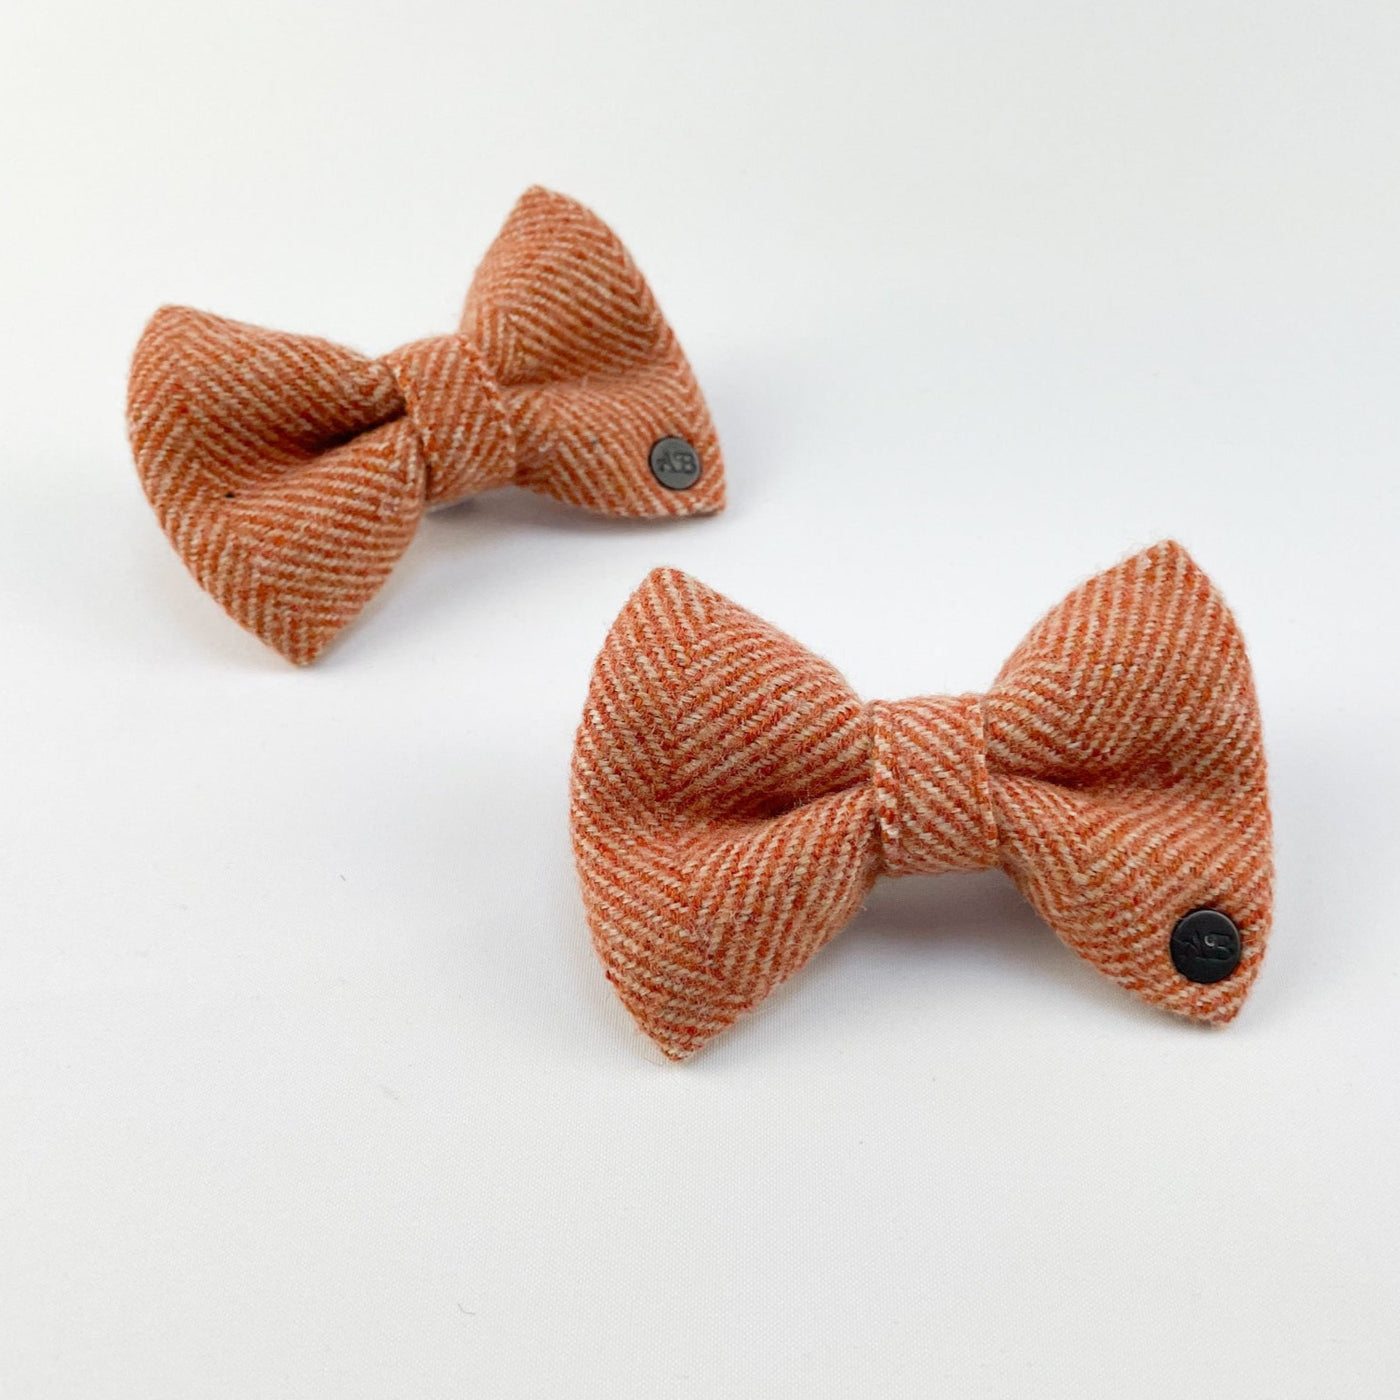 Luxury Burnt Umber Herringbone Tweed Dog Bow Tie available in three sizes